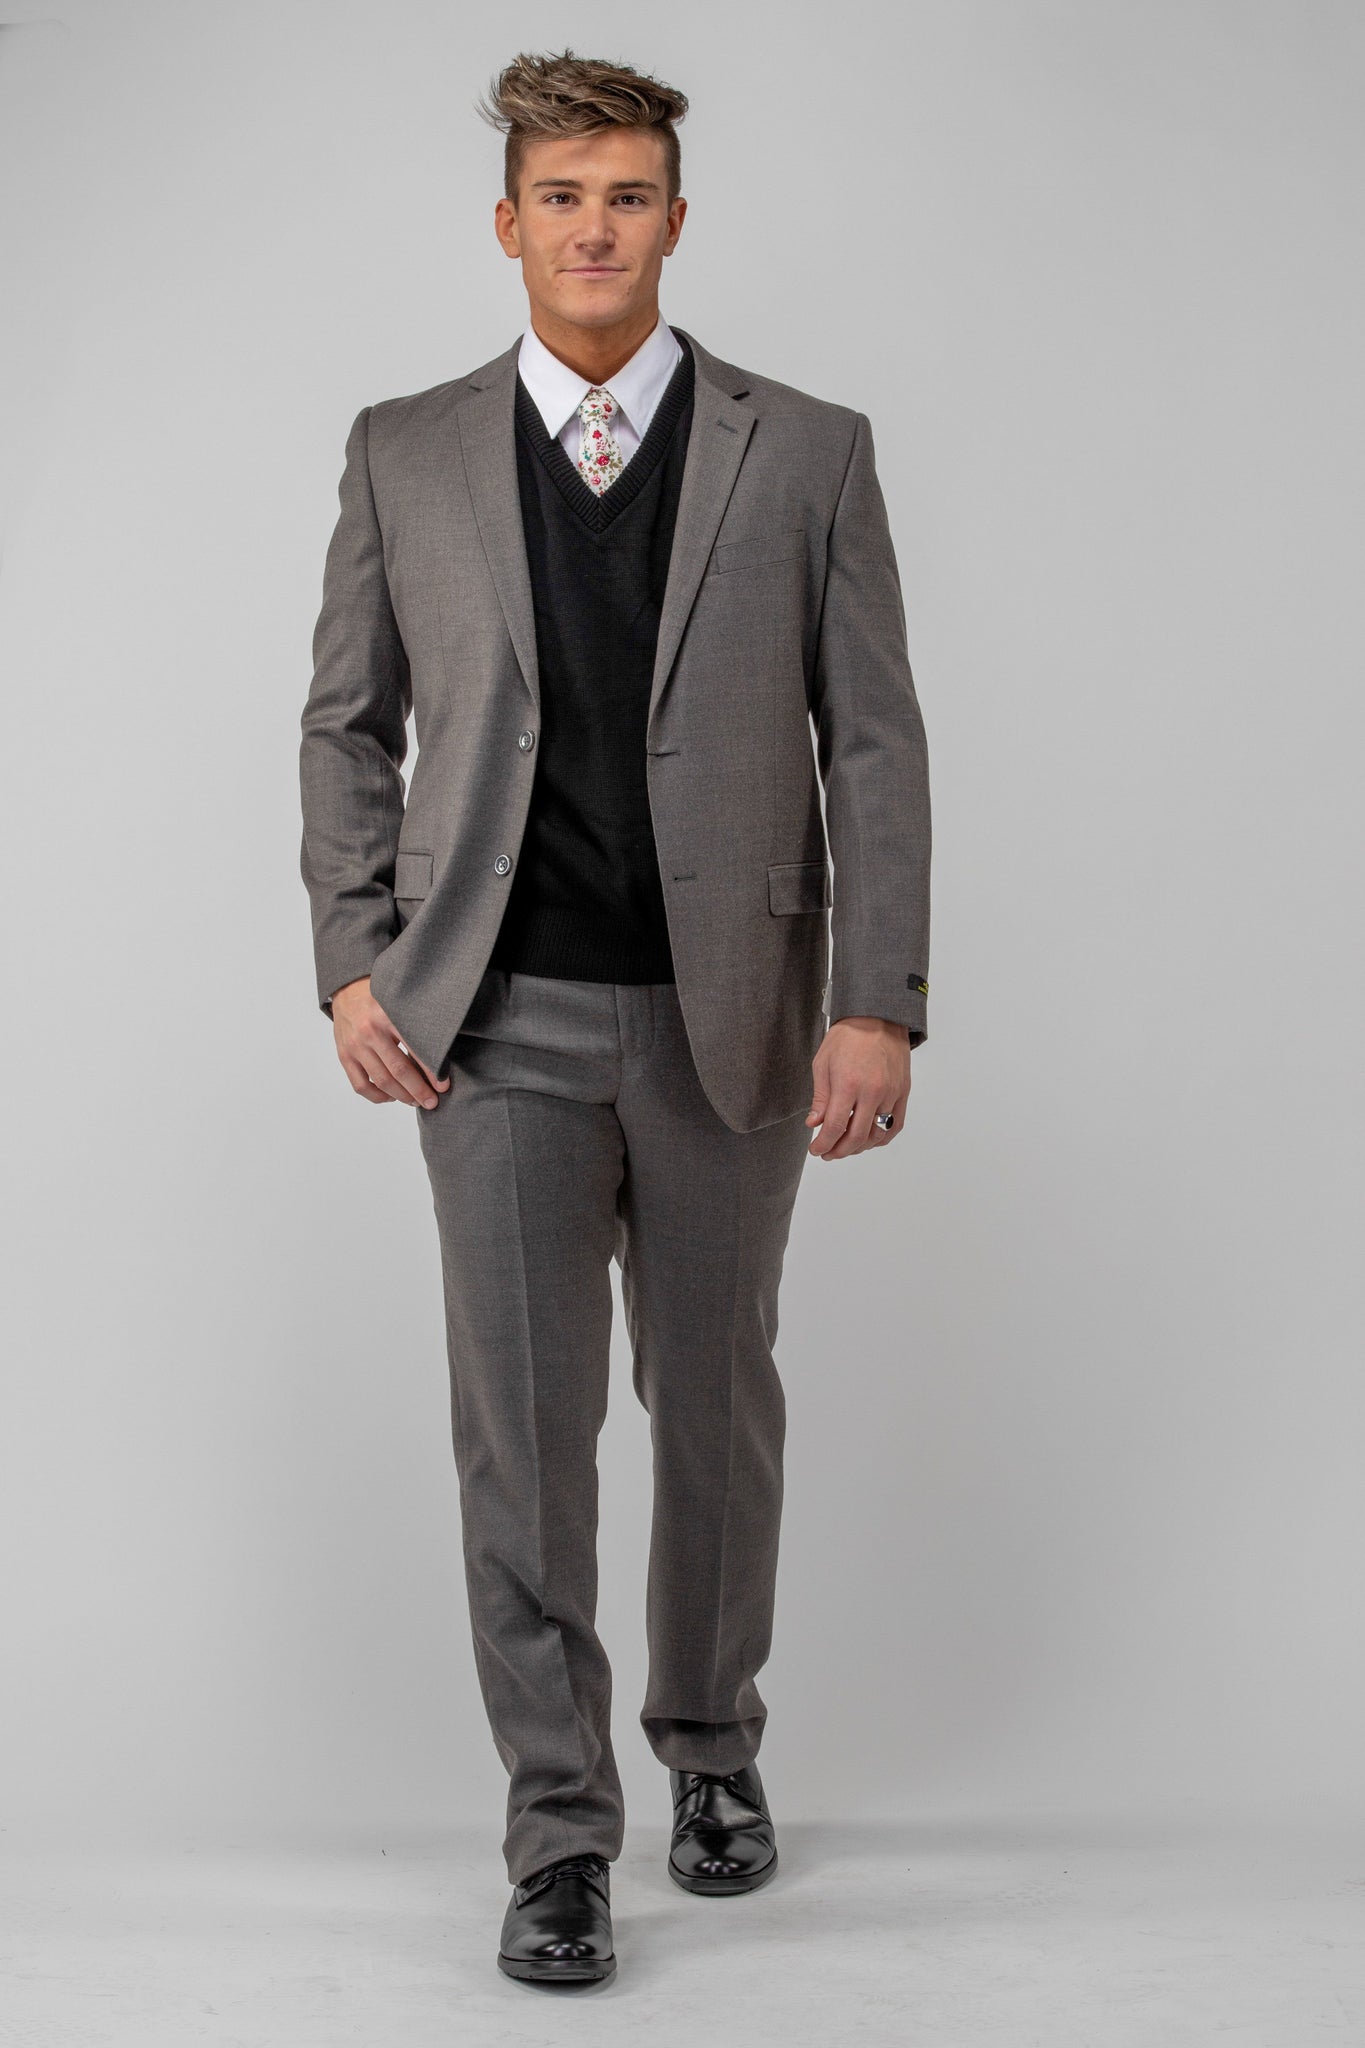 Men Jacket Suit Blazer Long Sleeve Slim Coat Tops Cardigan Casual Sweater  Casual | eBay